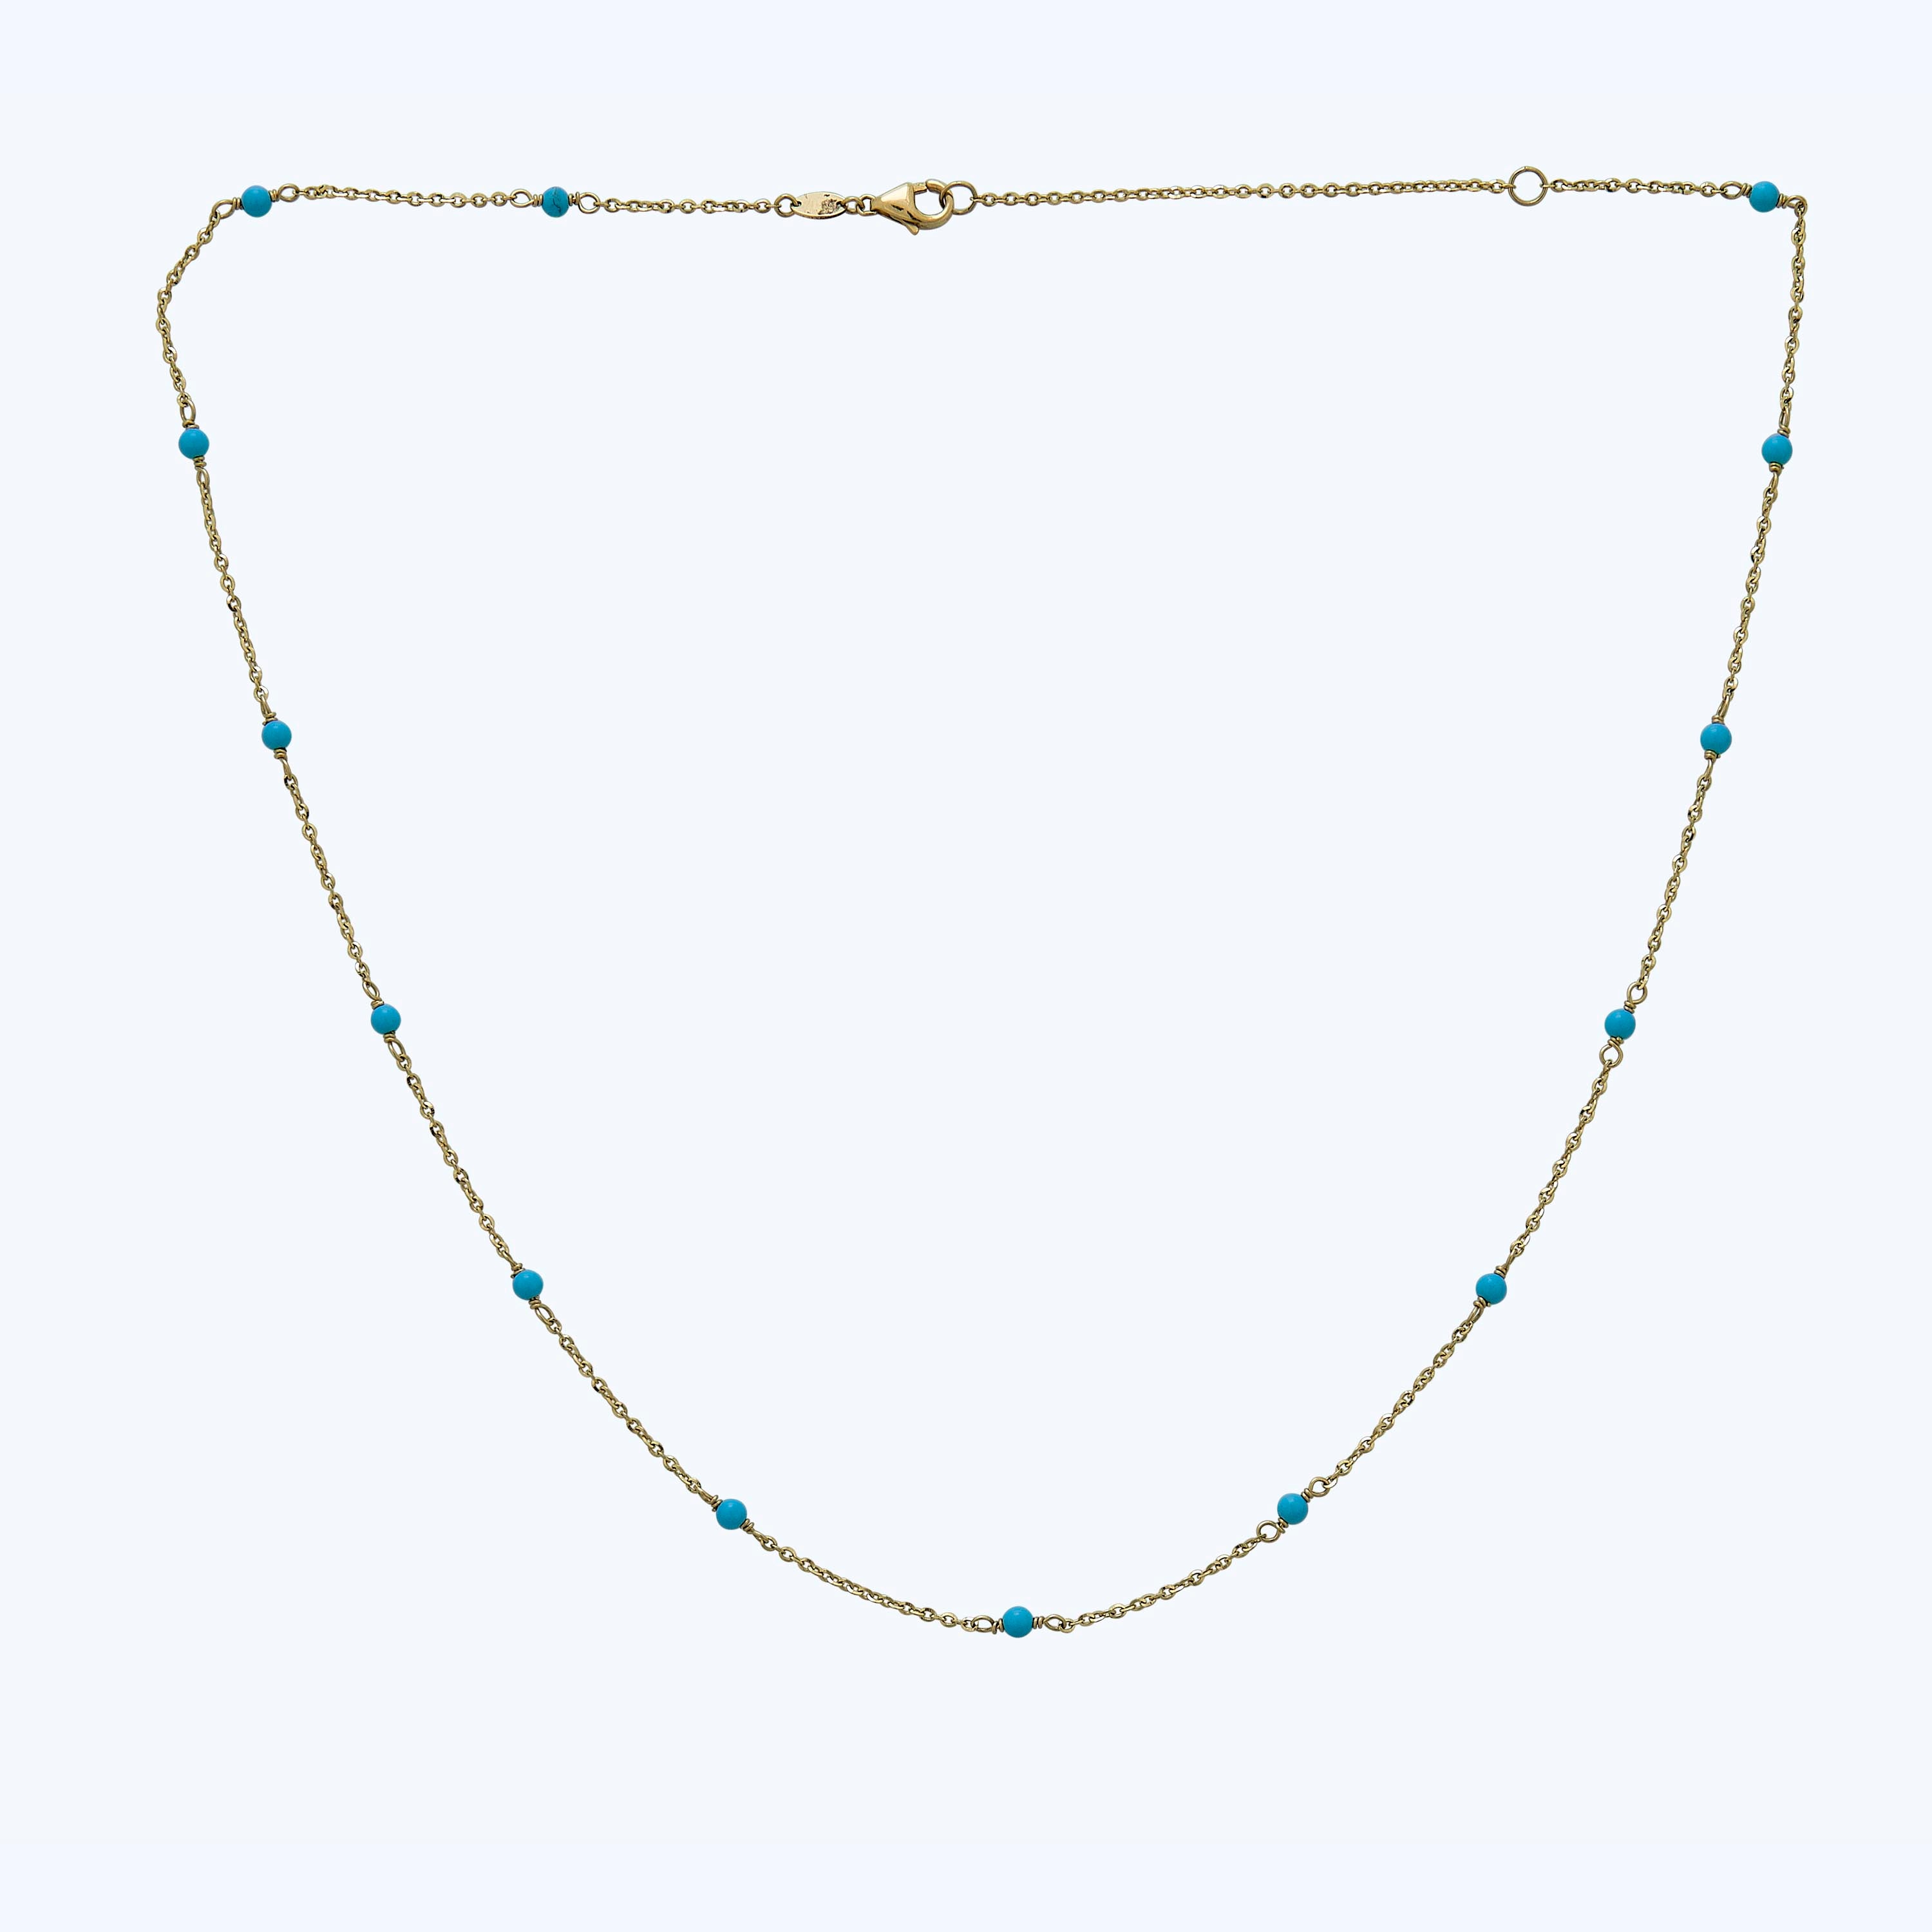 2.5 mm Italian 14 Turquoise Bead Chain